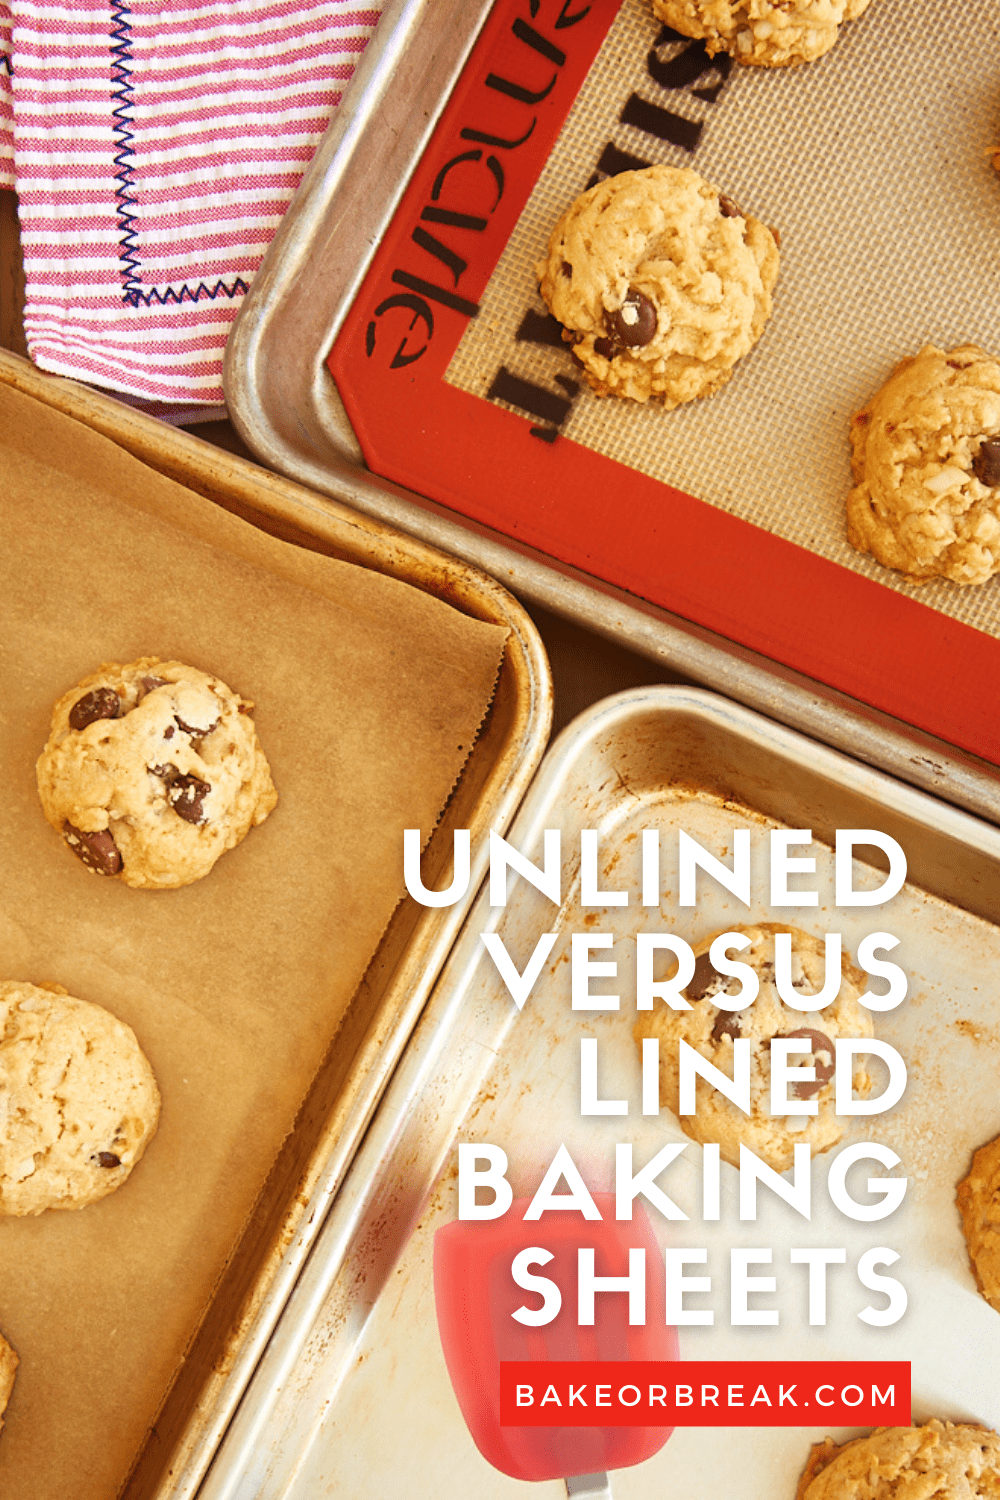 Unlined Versus Lined Baking Sheets bakeorbreak.com